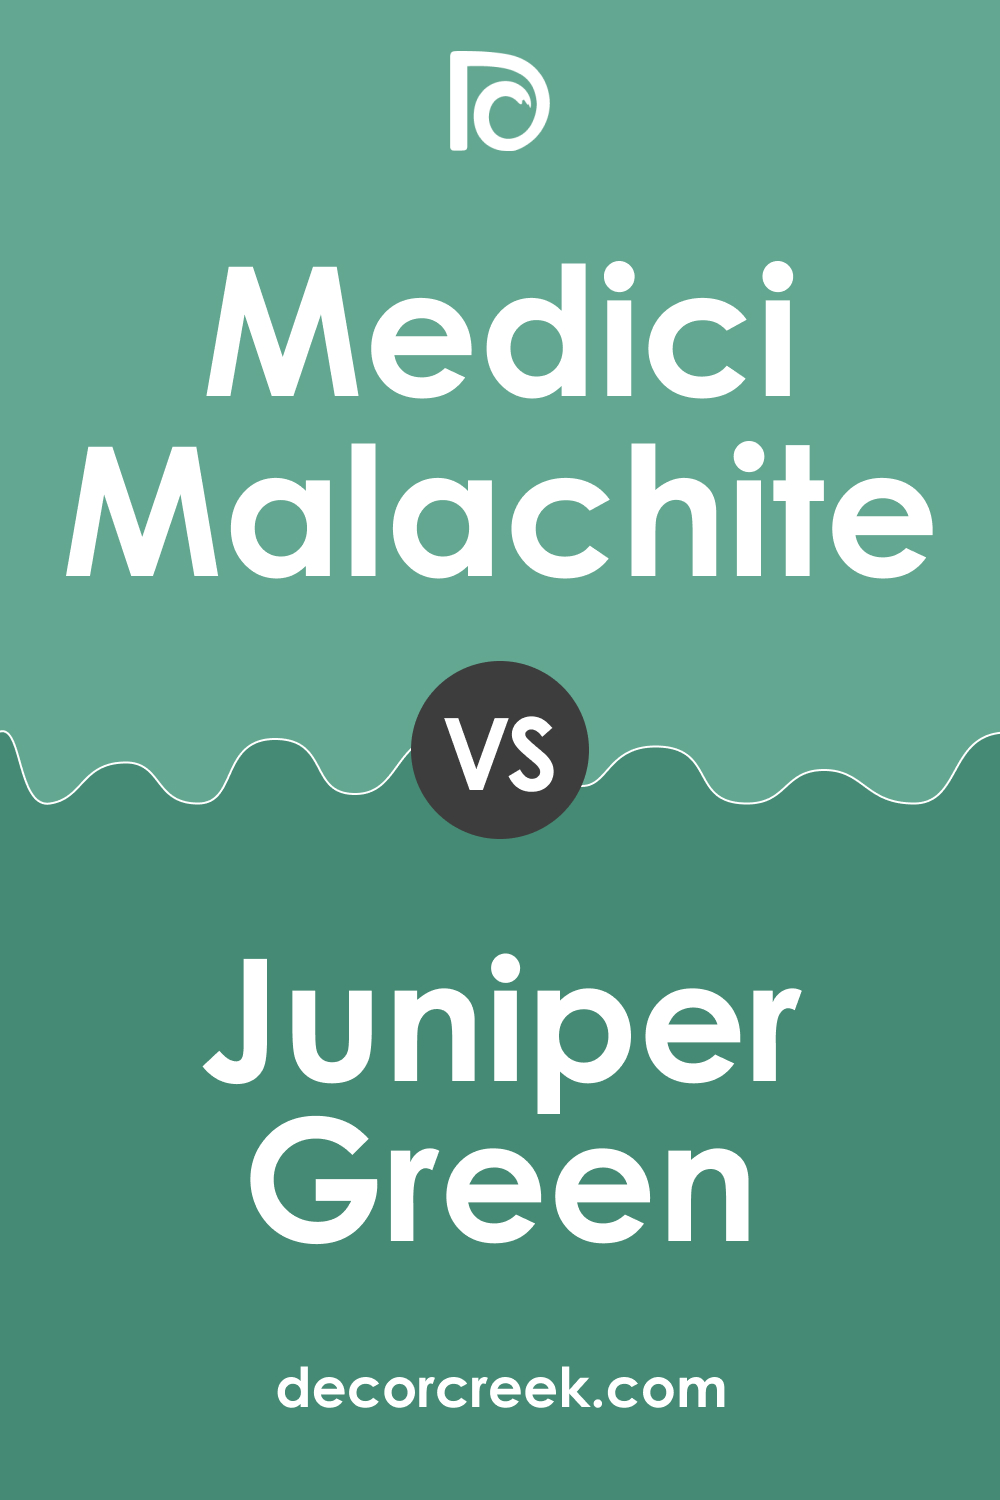 Medici Malachite 600 vs. BM 601 Juniper Green